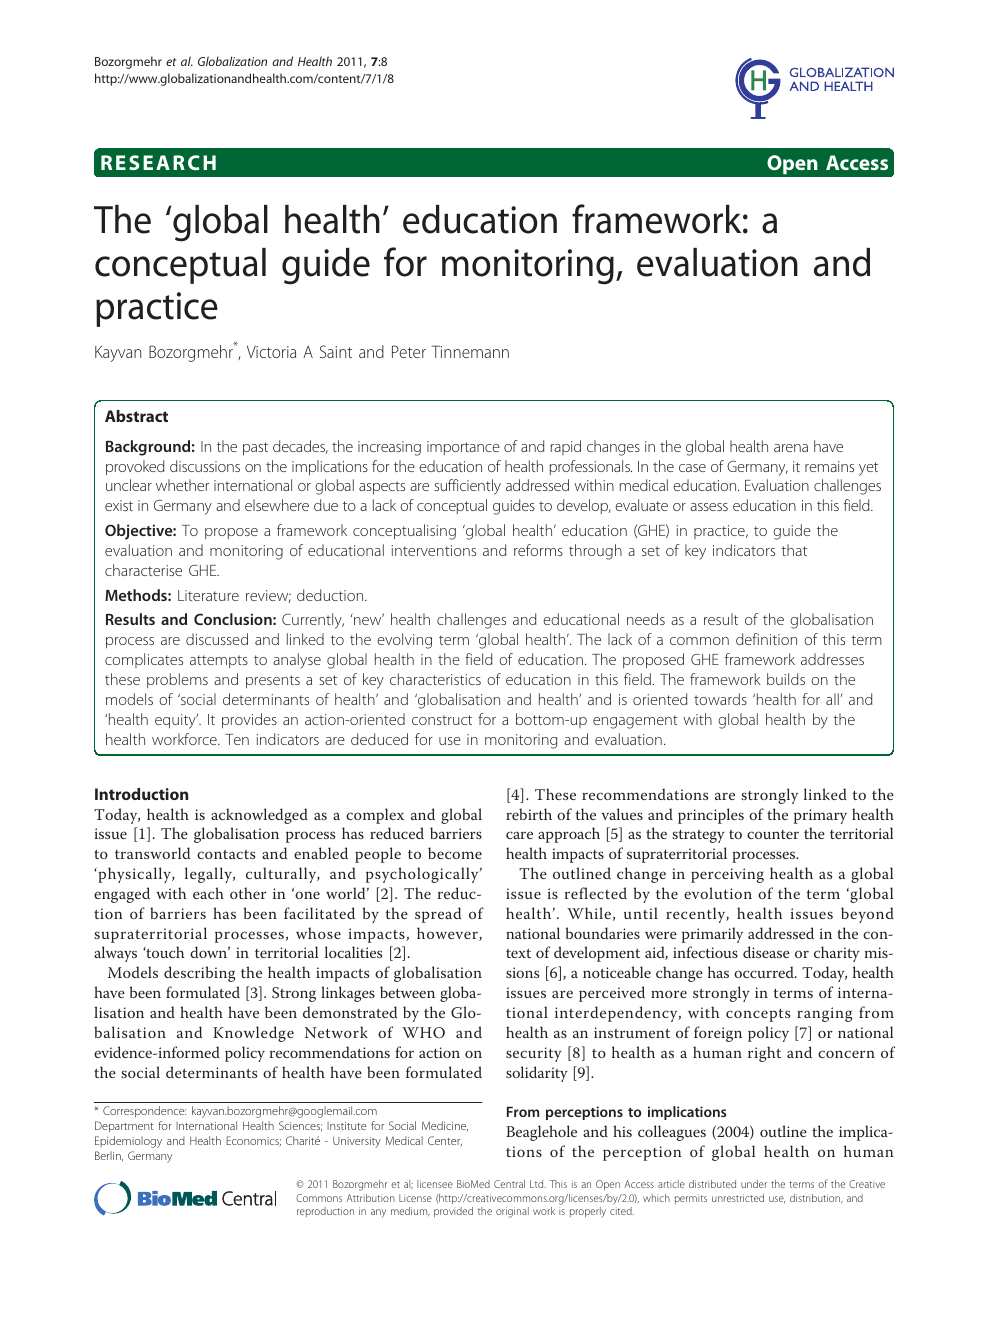 Research paper outline health economics